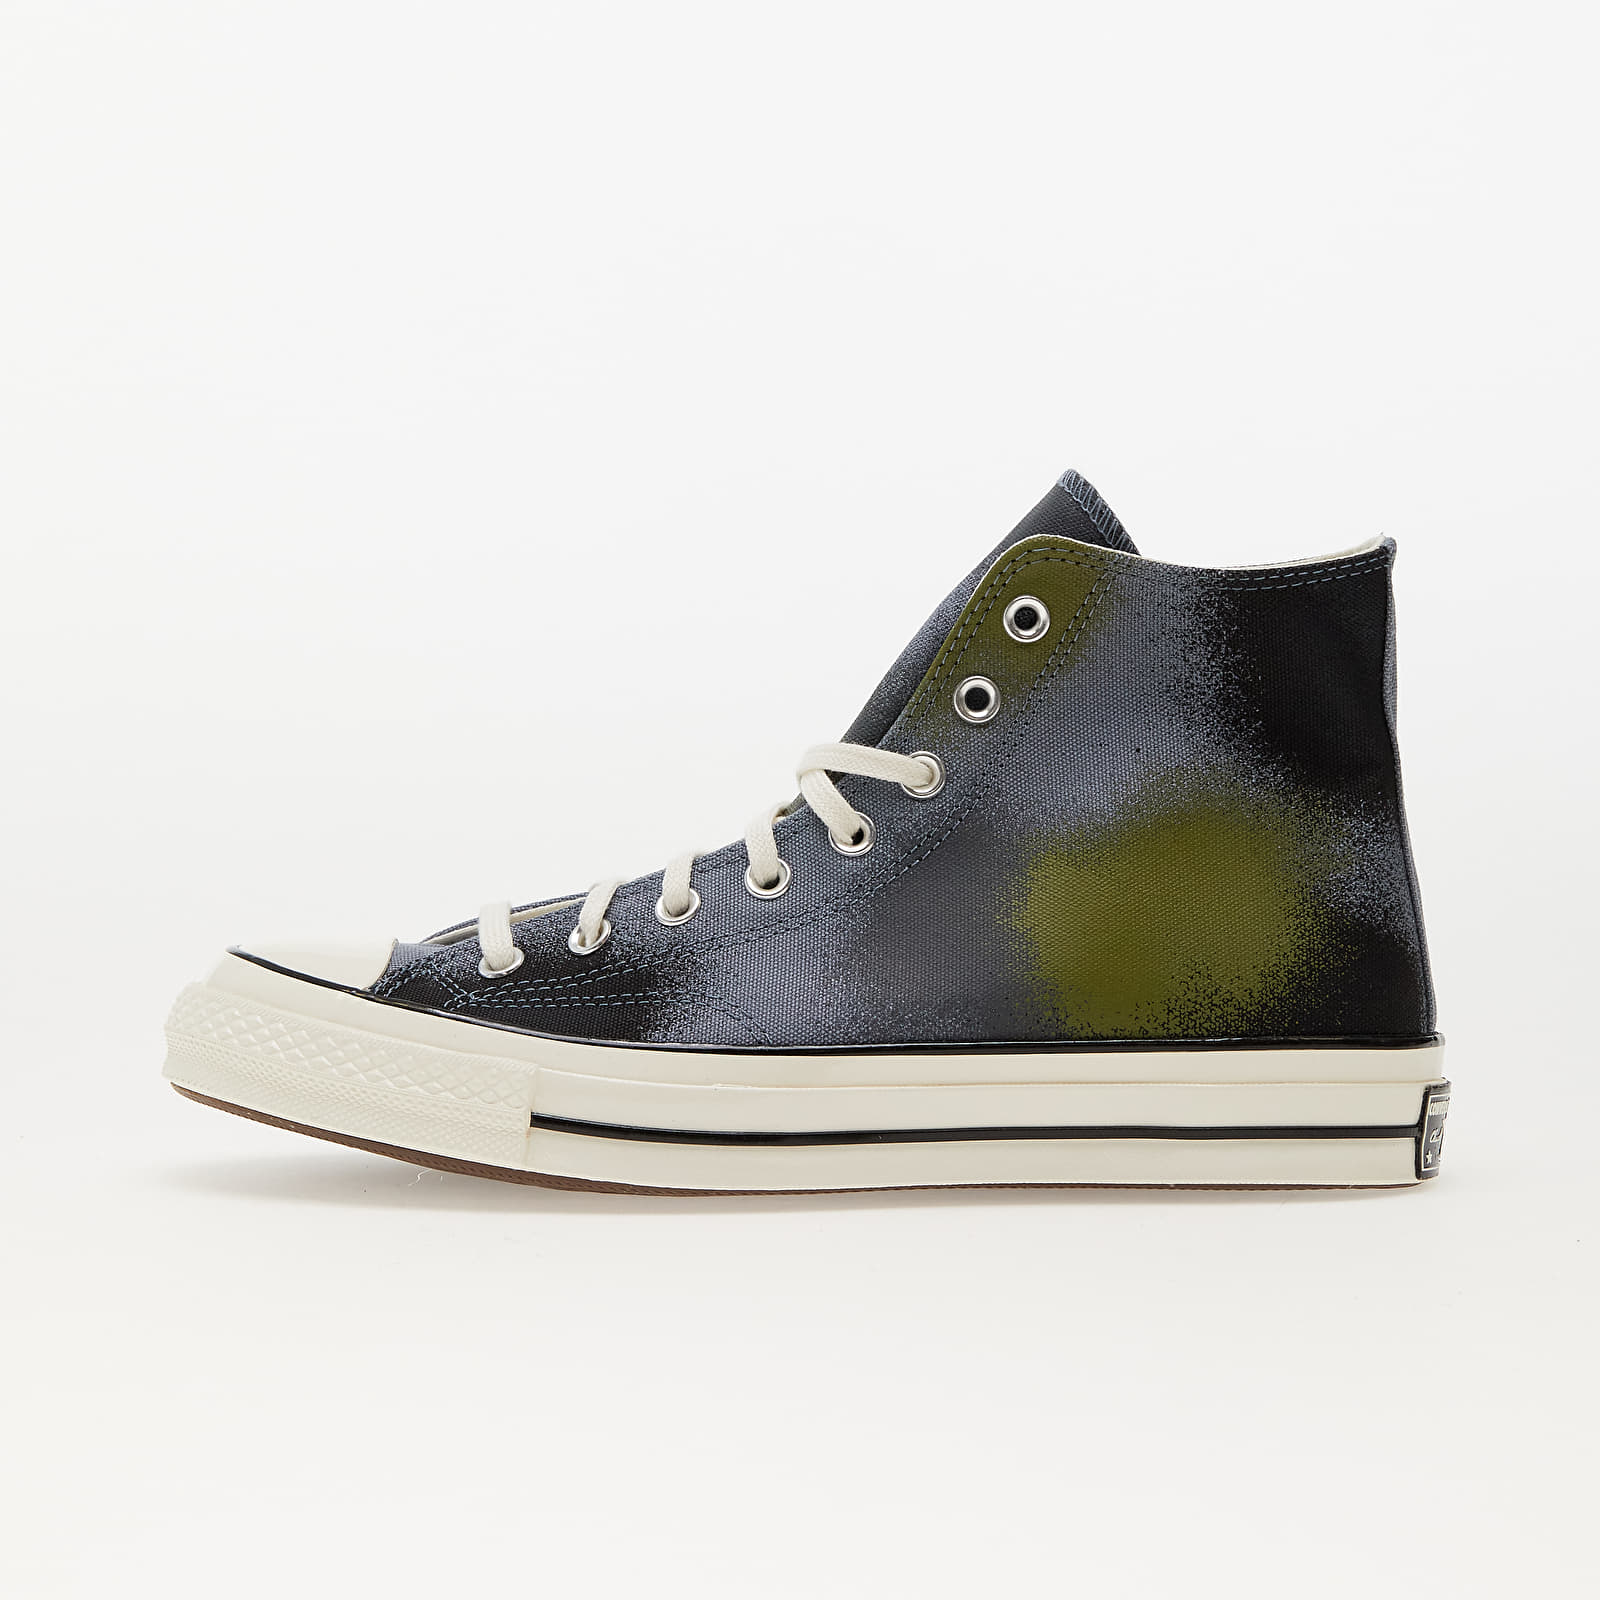 Men's shoes Converse Chuck 70 Spray Paint Lunar Grey/ Cyber Grey/ Grassy